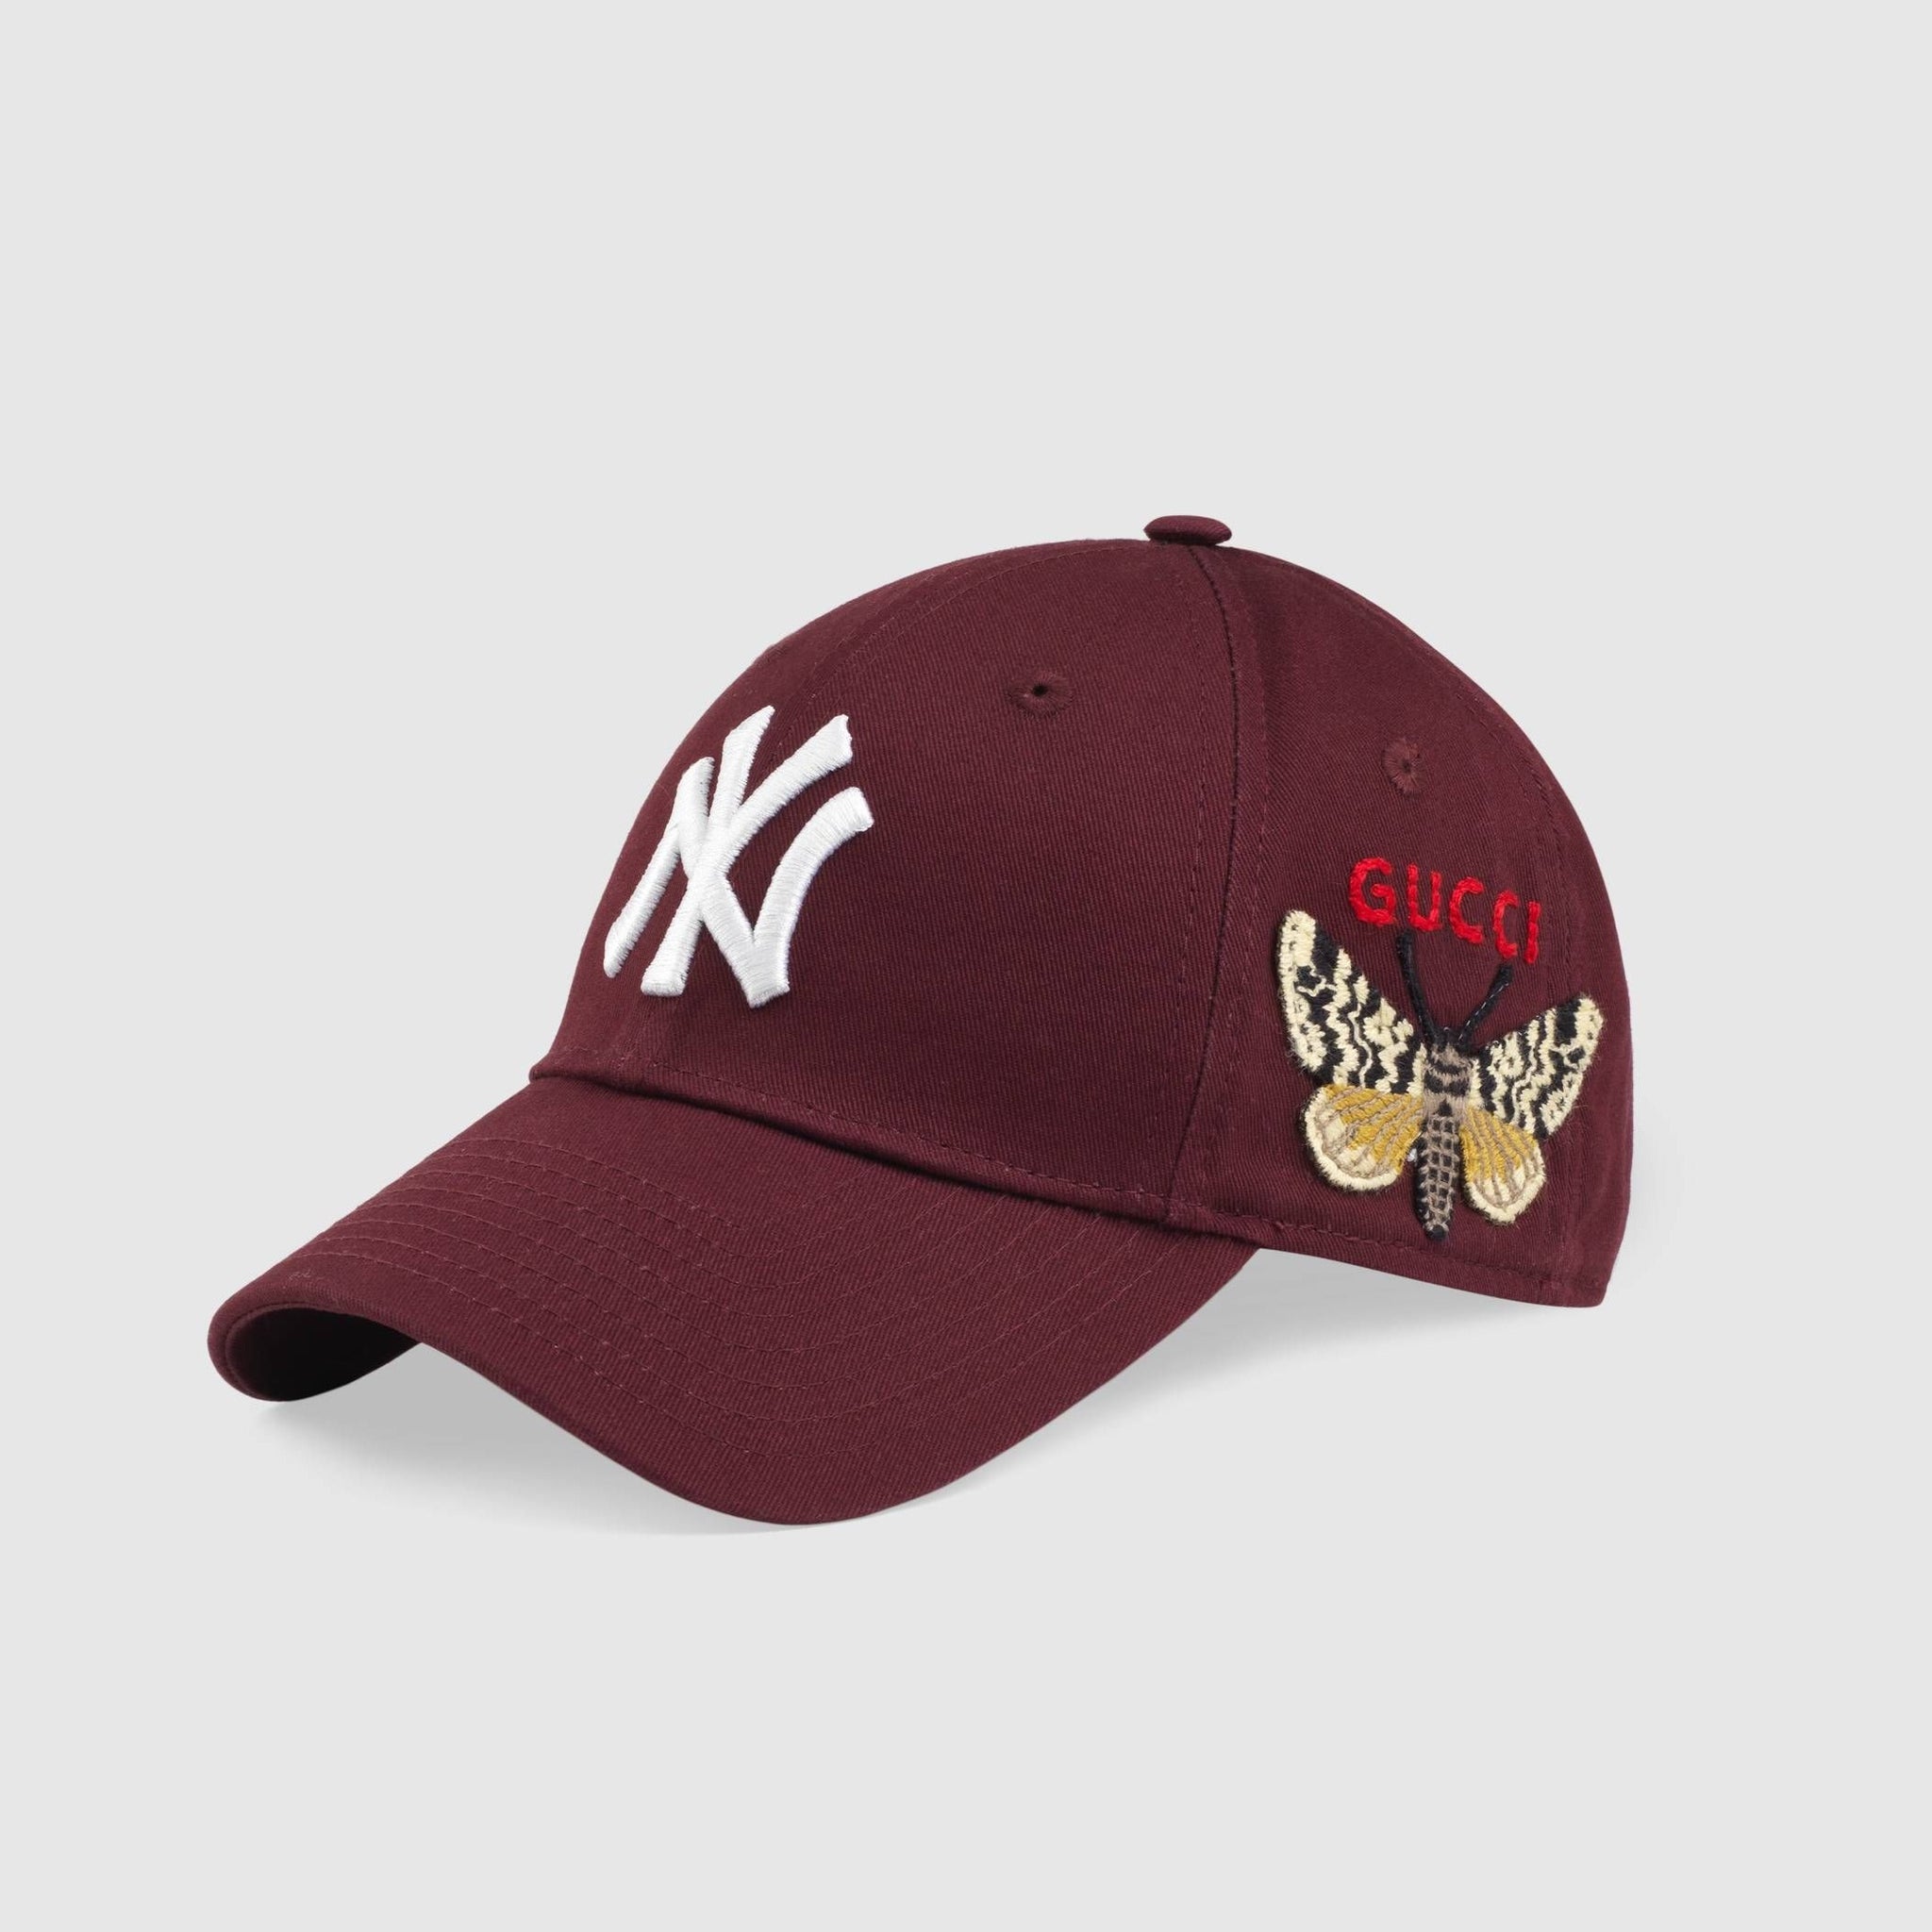 Gucci, Accessories, Gucci New York Yankees Baseball Cap